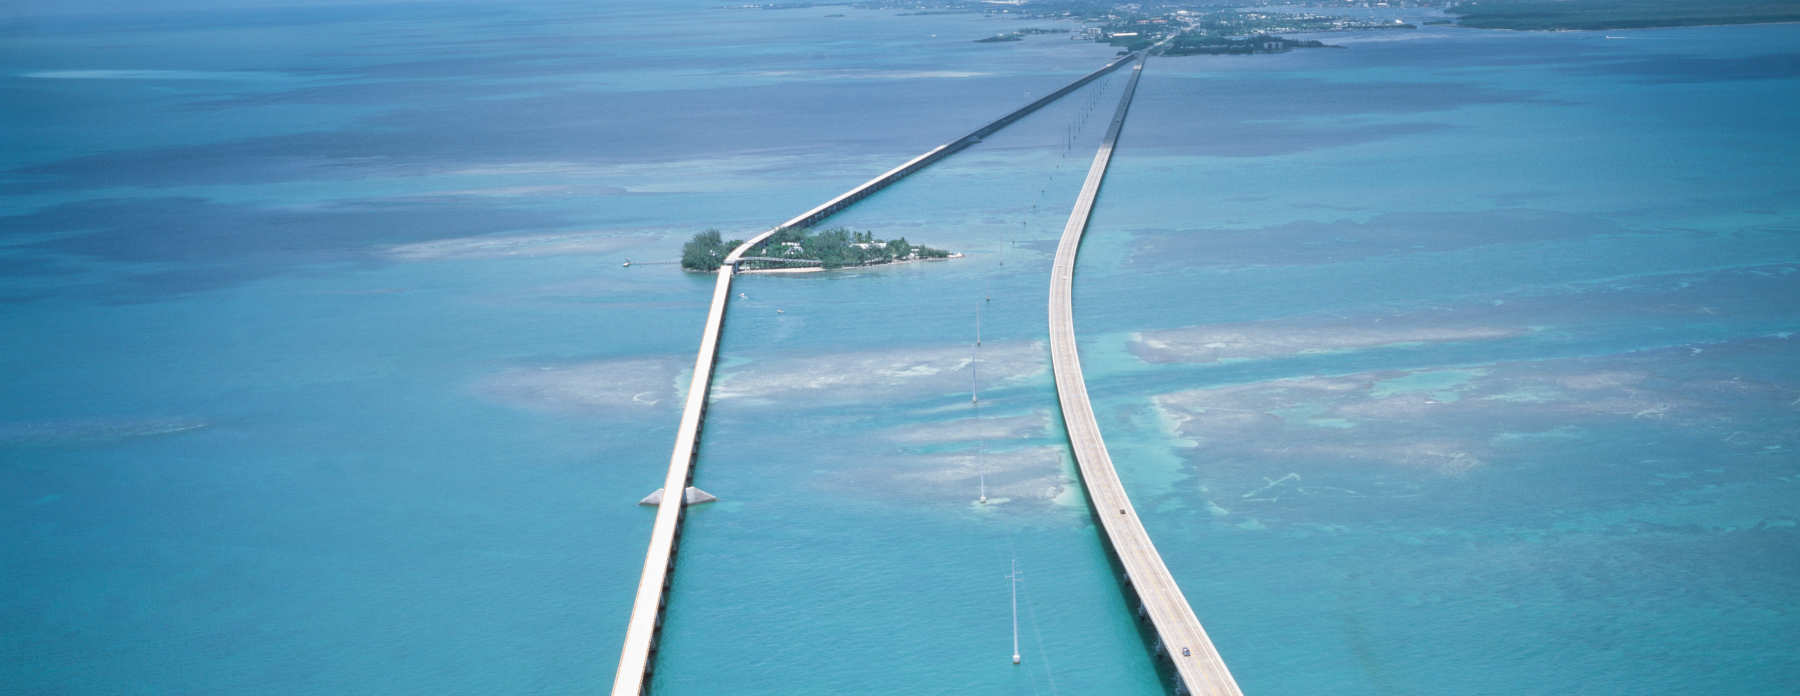 Image of the Florida Keys 7 mile bridge and beautiful waterways